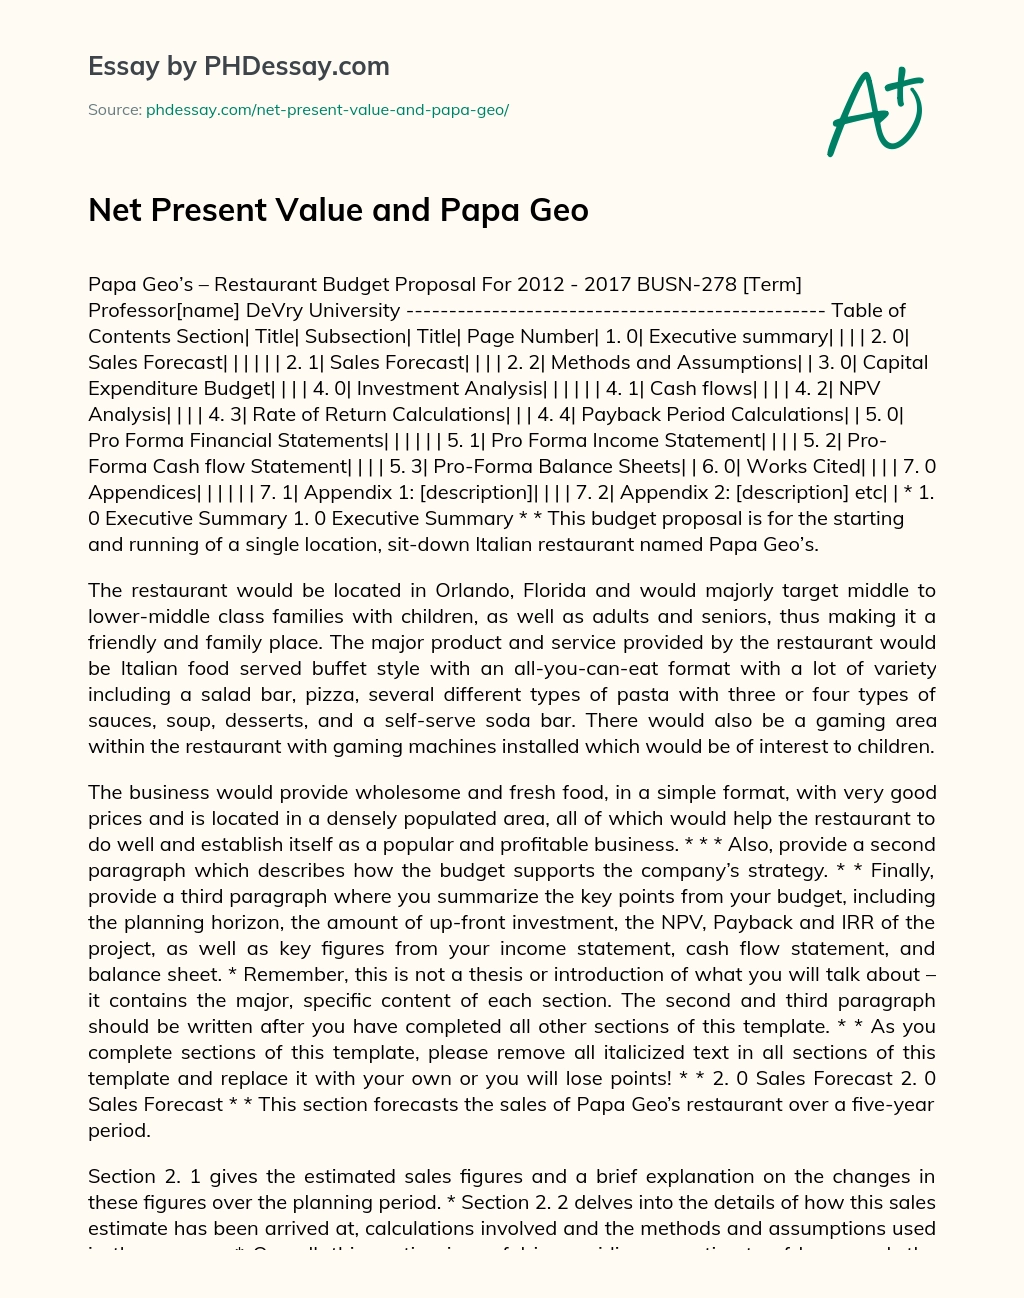 Net Present Value and Papa Geo essay